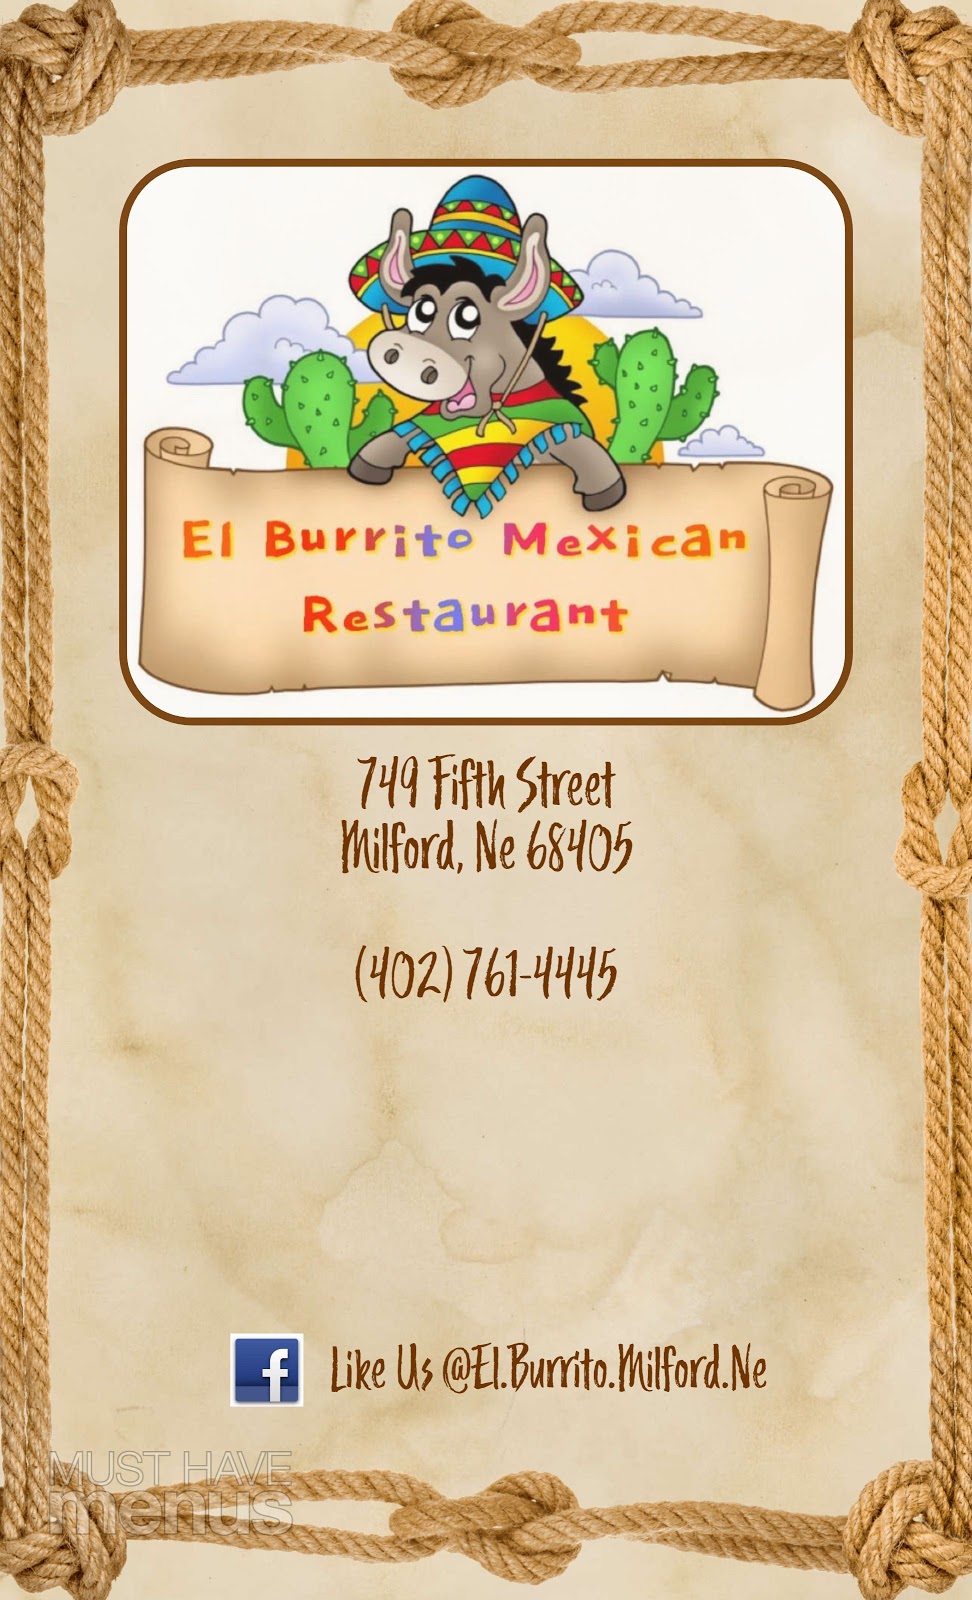 El Burrito Mexican Restaurant | restaurant | 749 5th St, Milford, NE 68405, USA | 4027614445 OR +1 402-761-4445